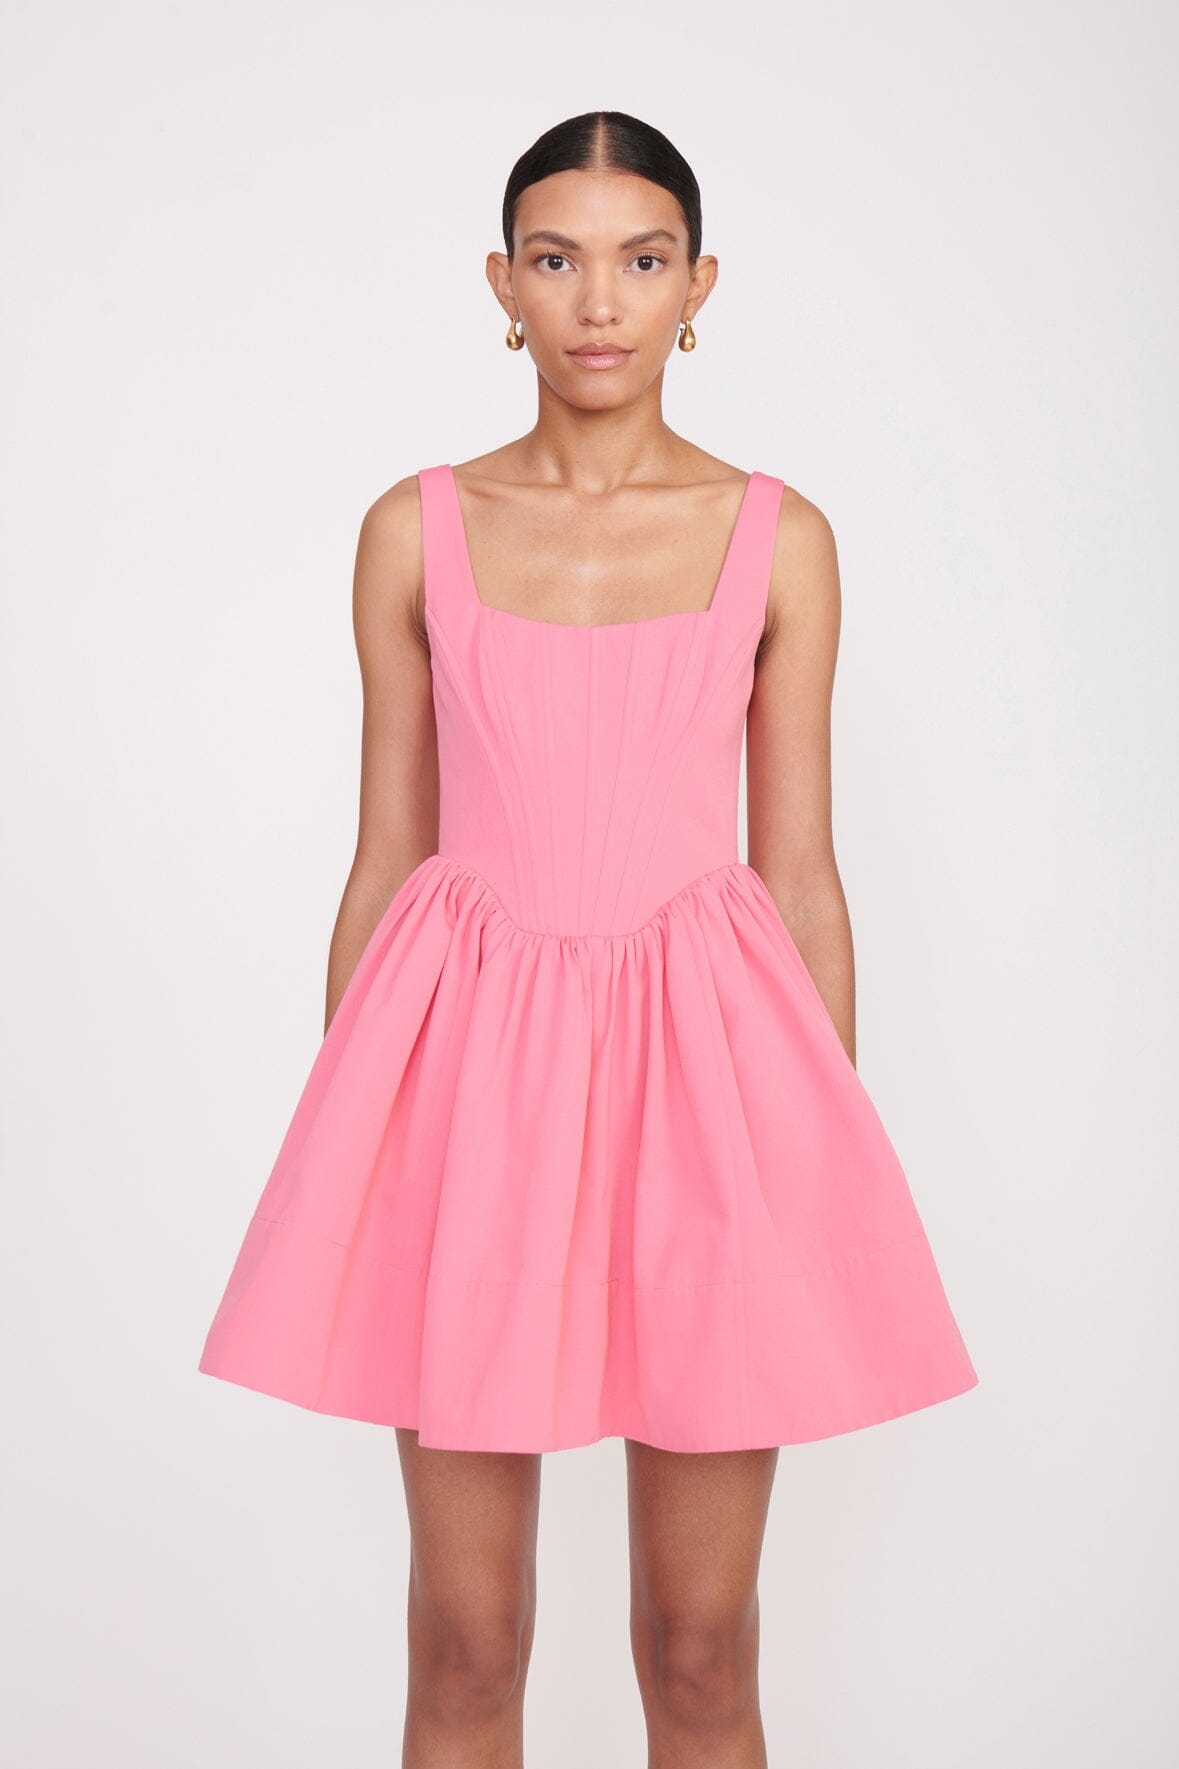 staud pink dress